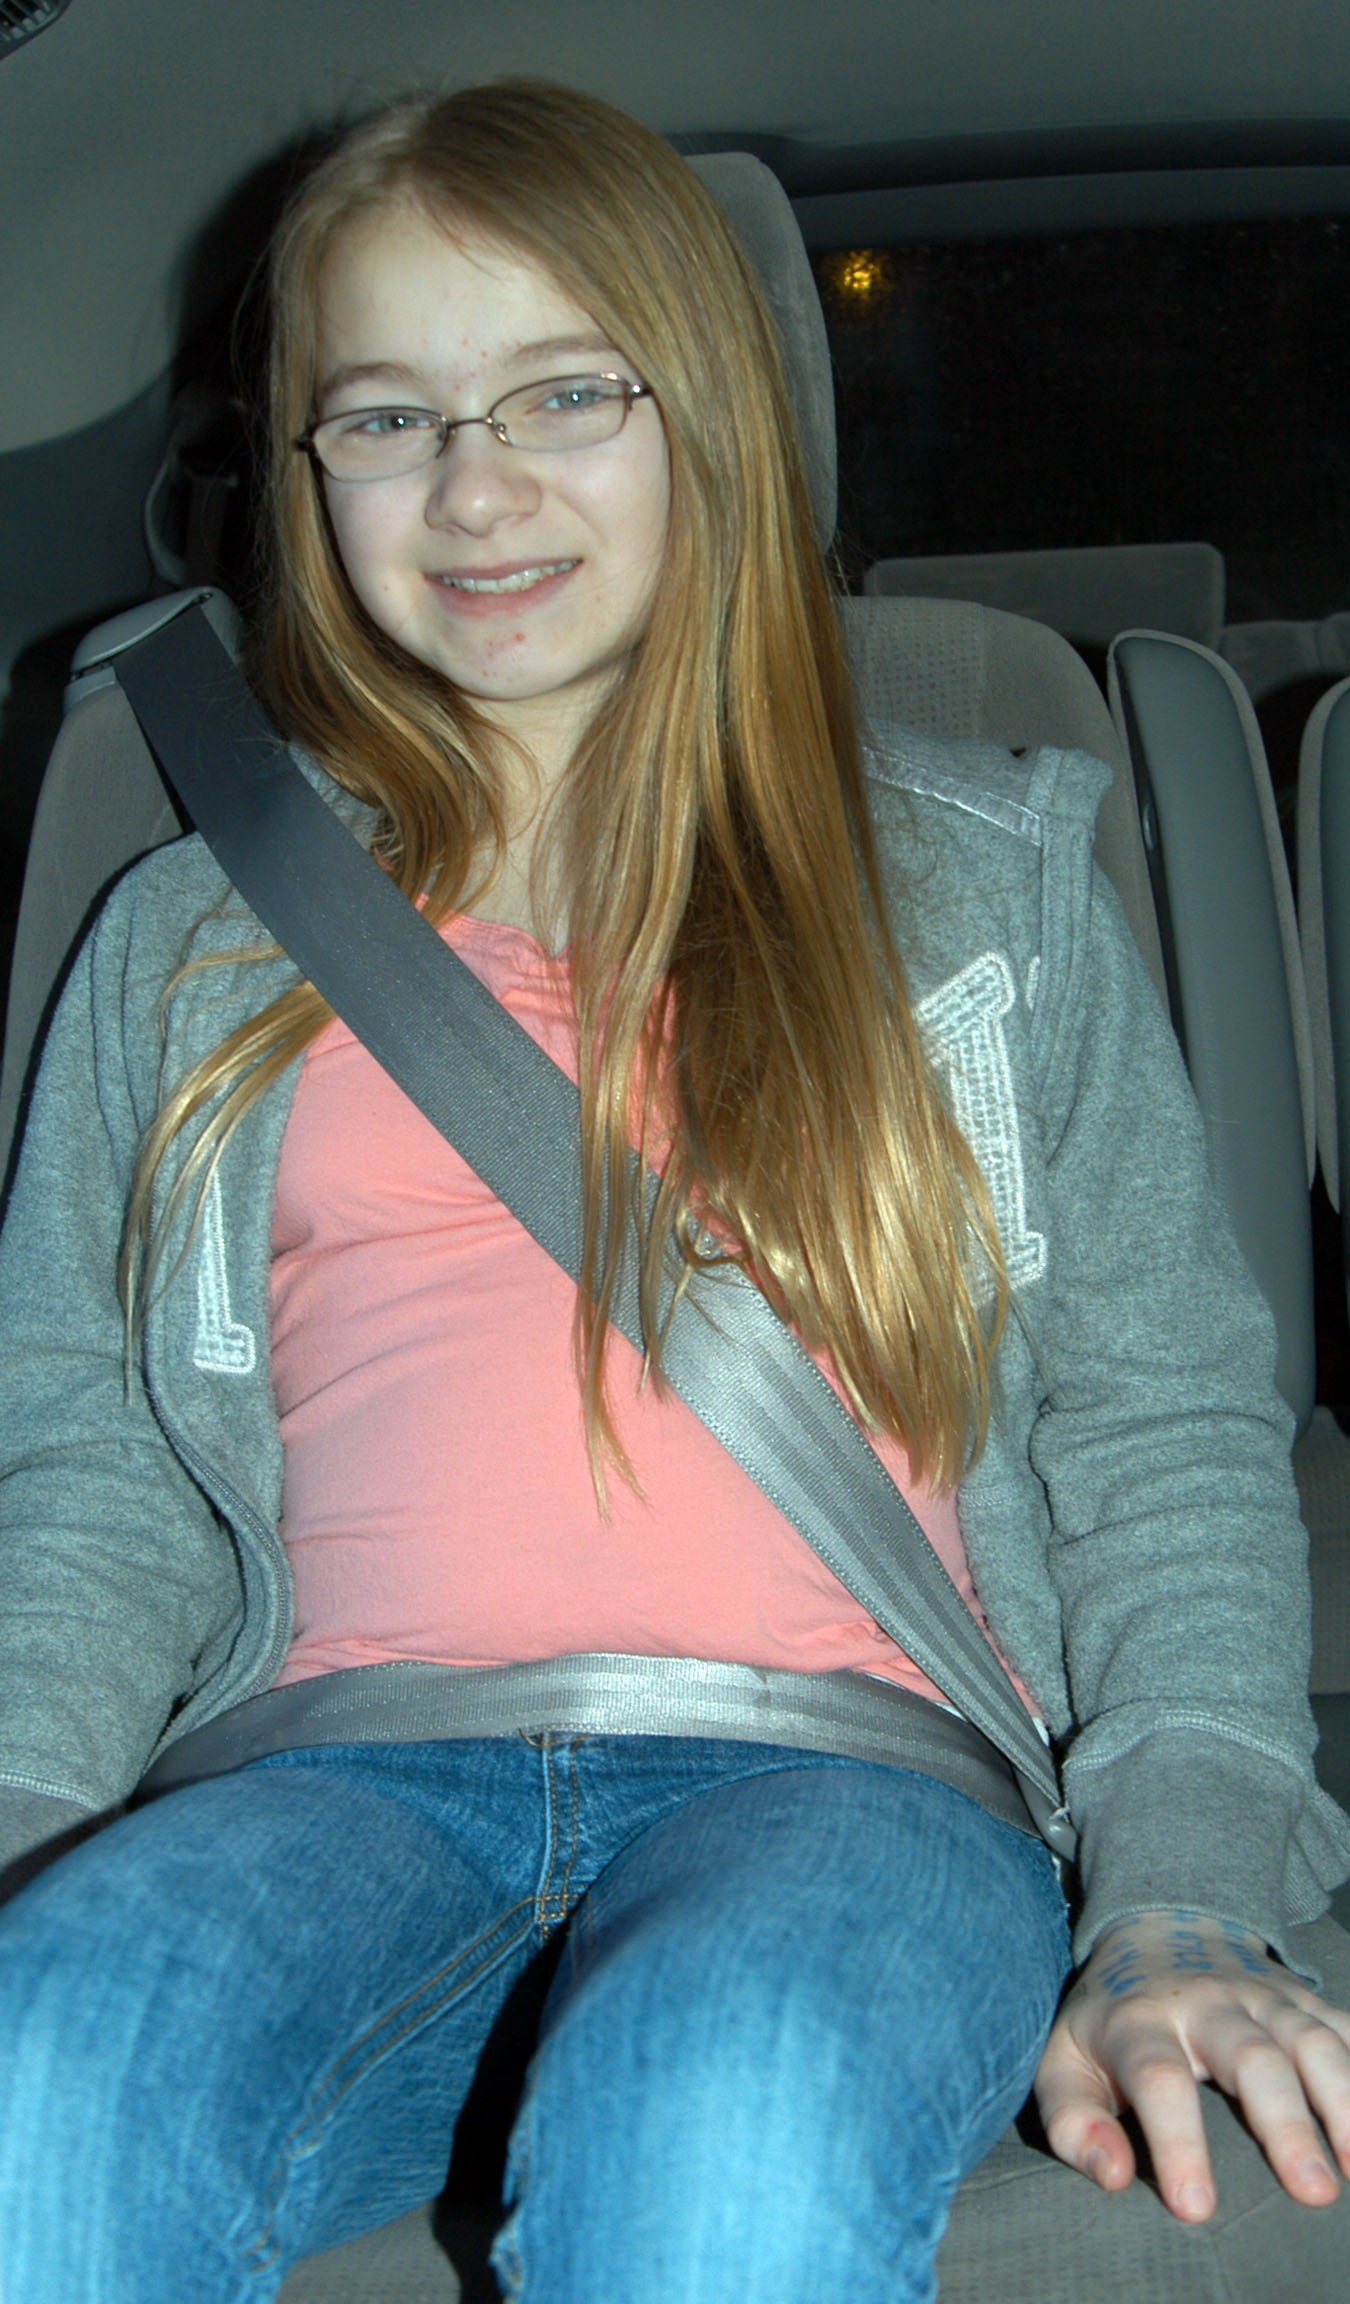 Older child in seatbelt.